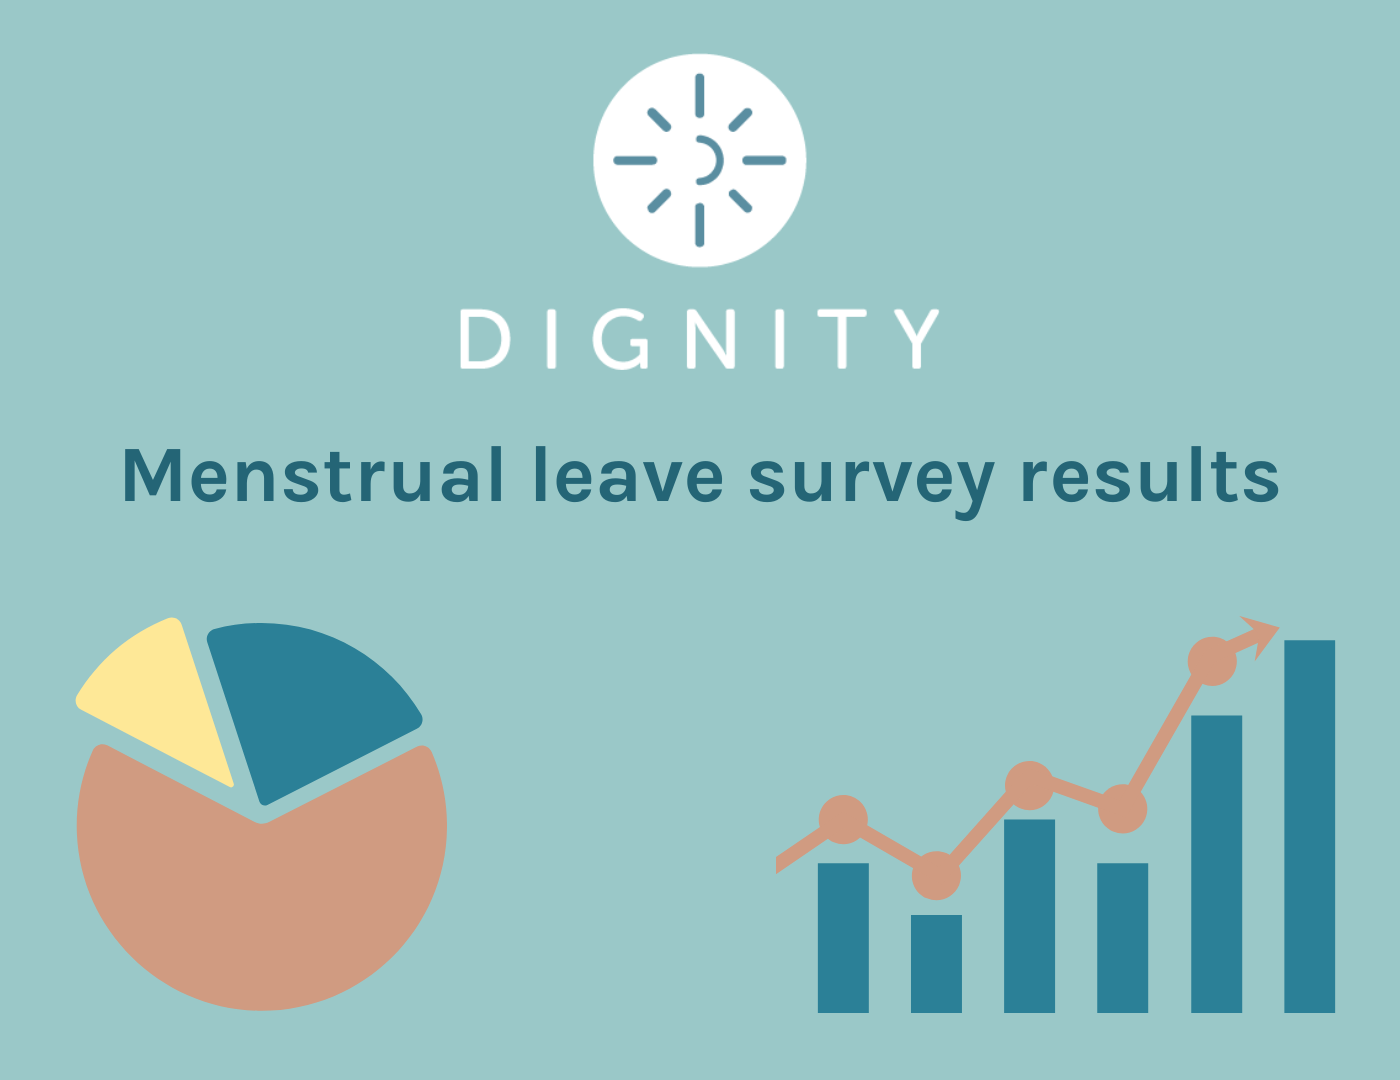 Menstrual leave survey results